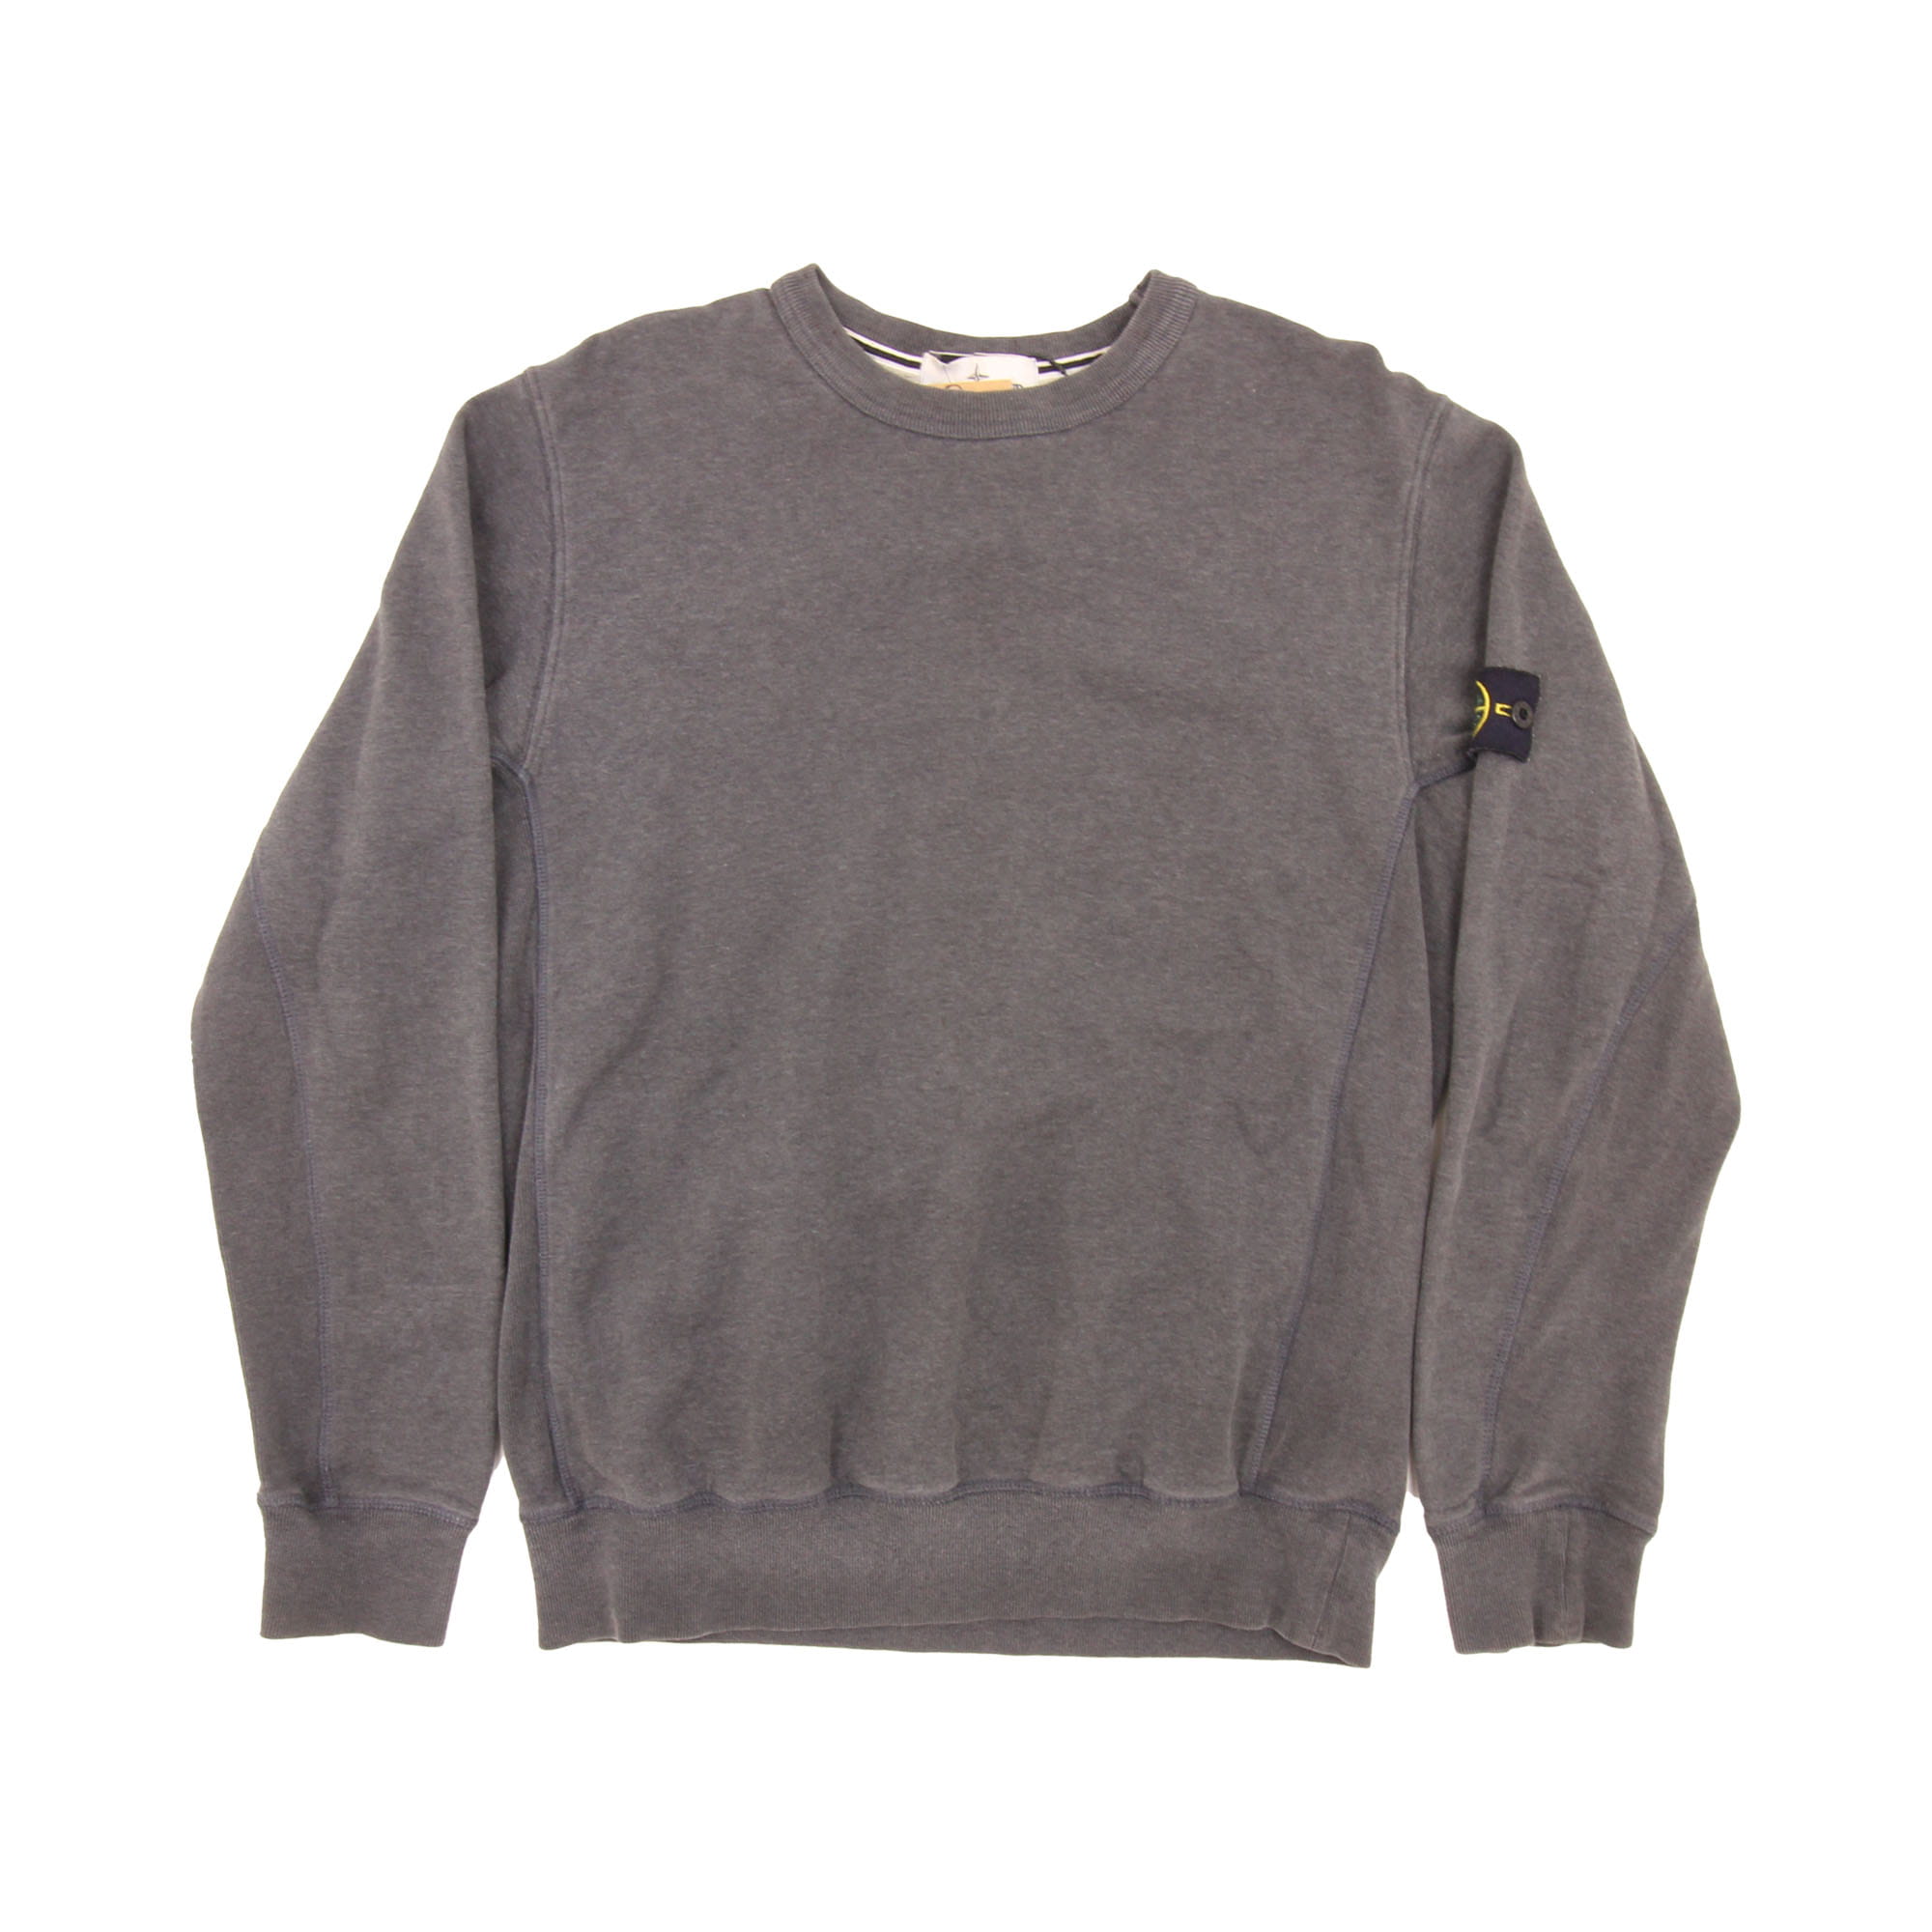 Stone Island Sweatshirt Grey - L 